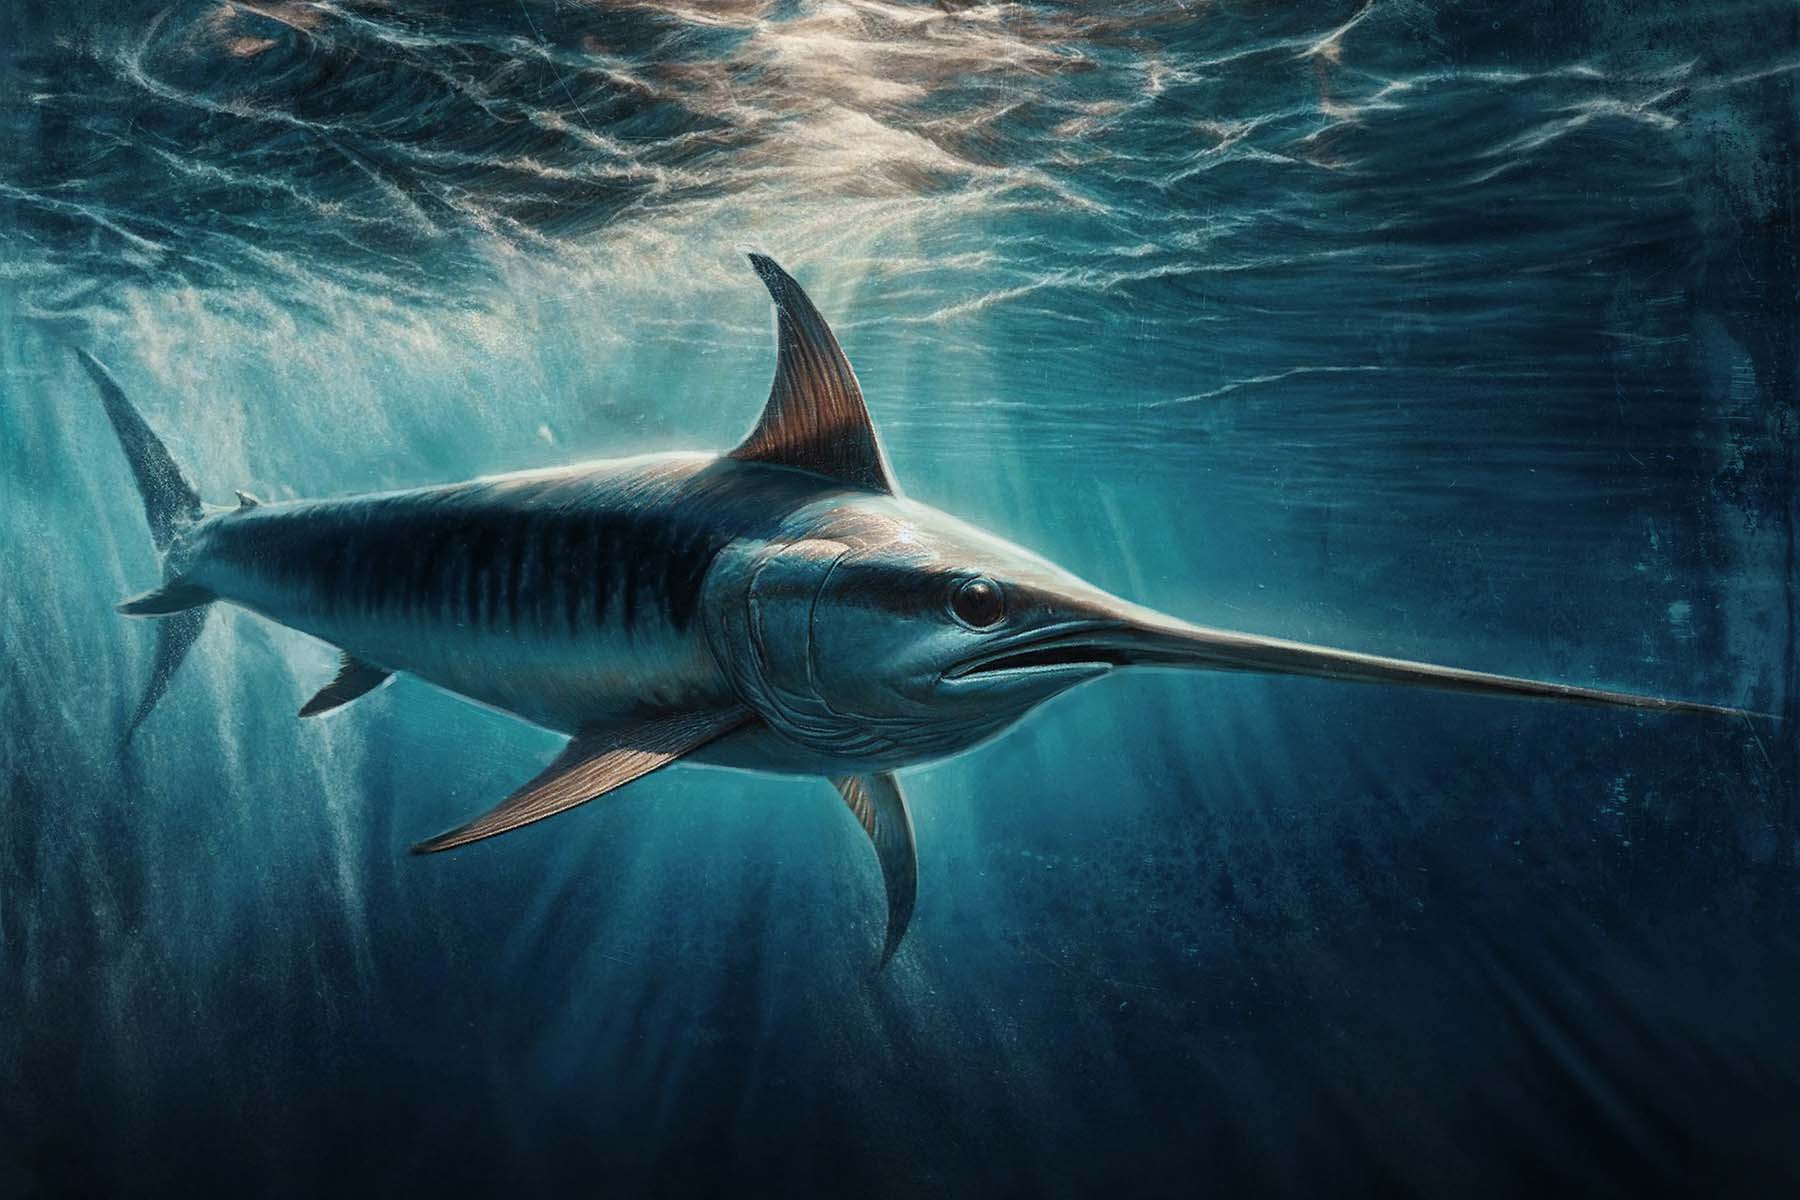 Swordfish Migration - The Long Journey of an Apex Predator